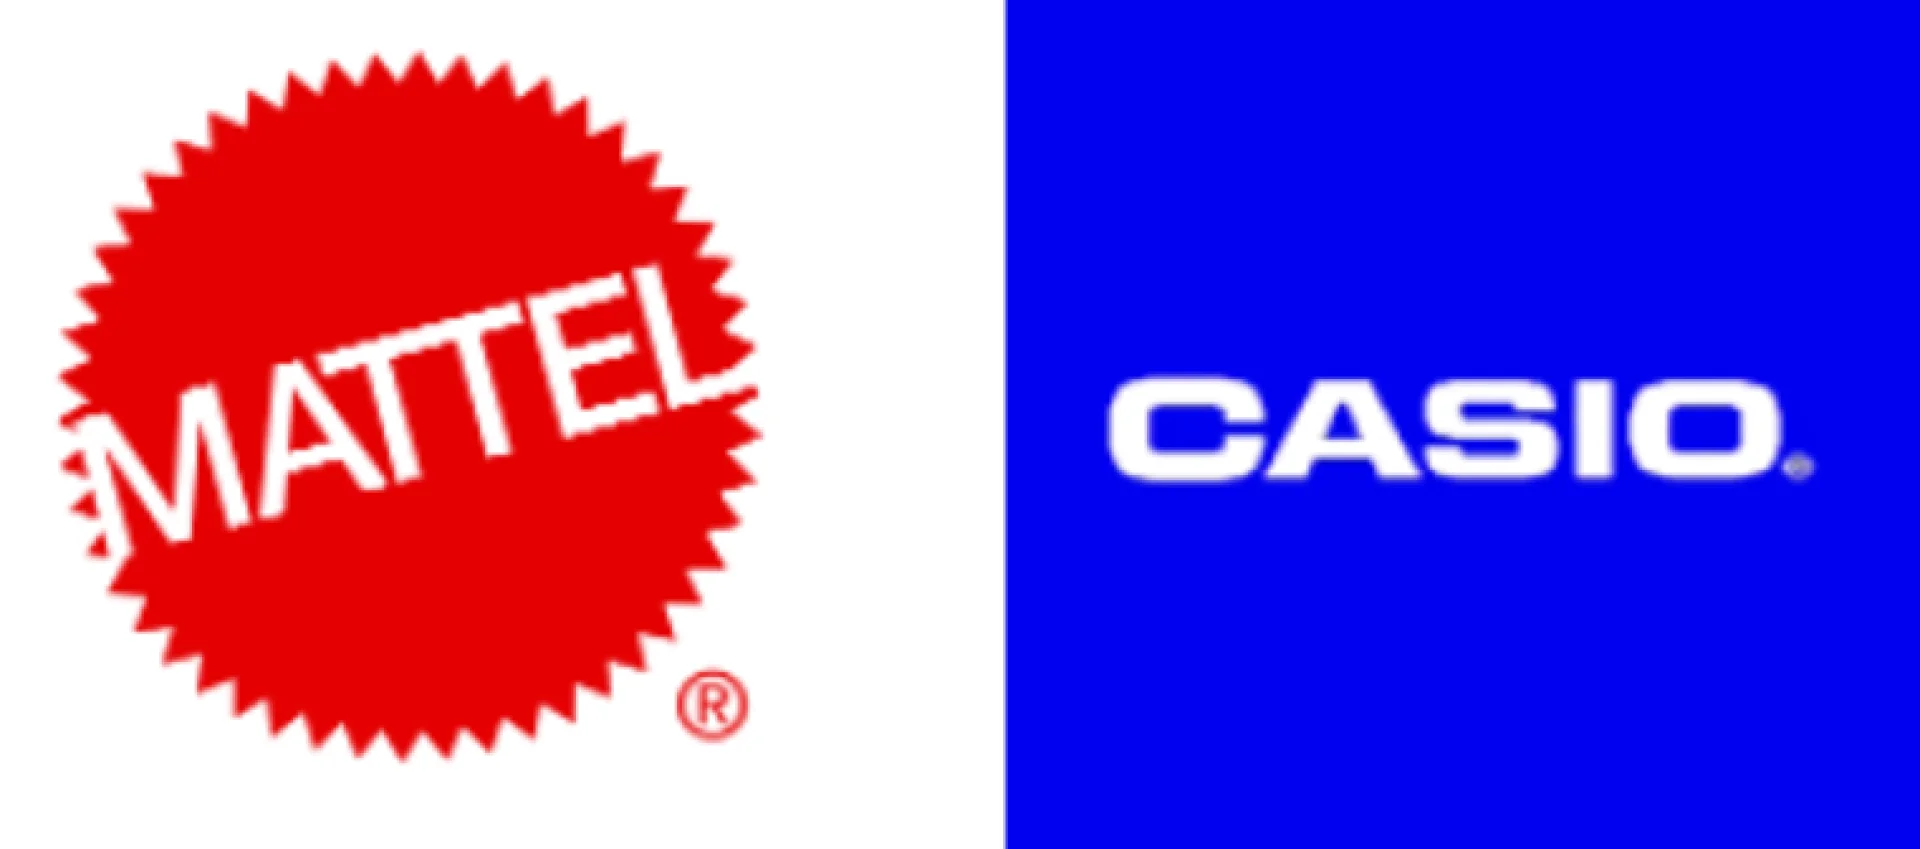 New Brands on the site! Mattel &amp; Casio